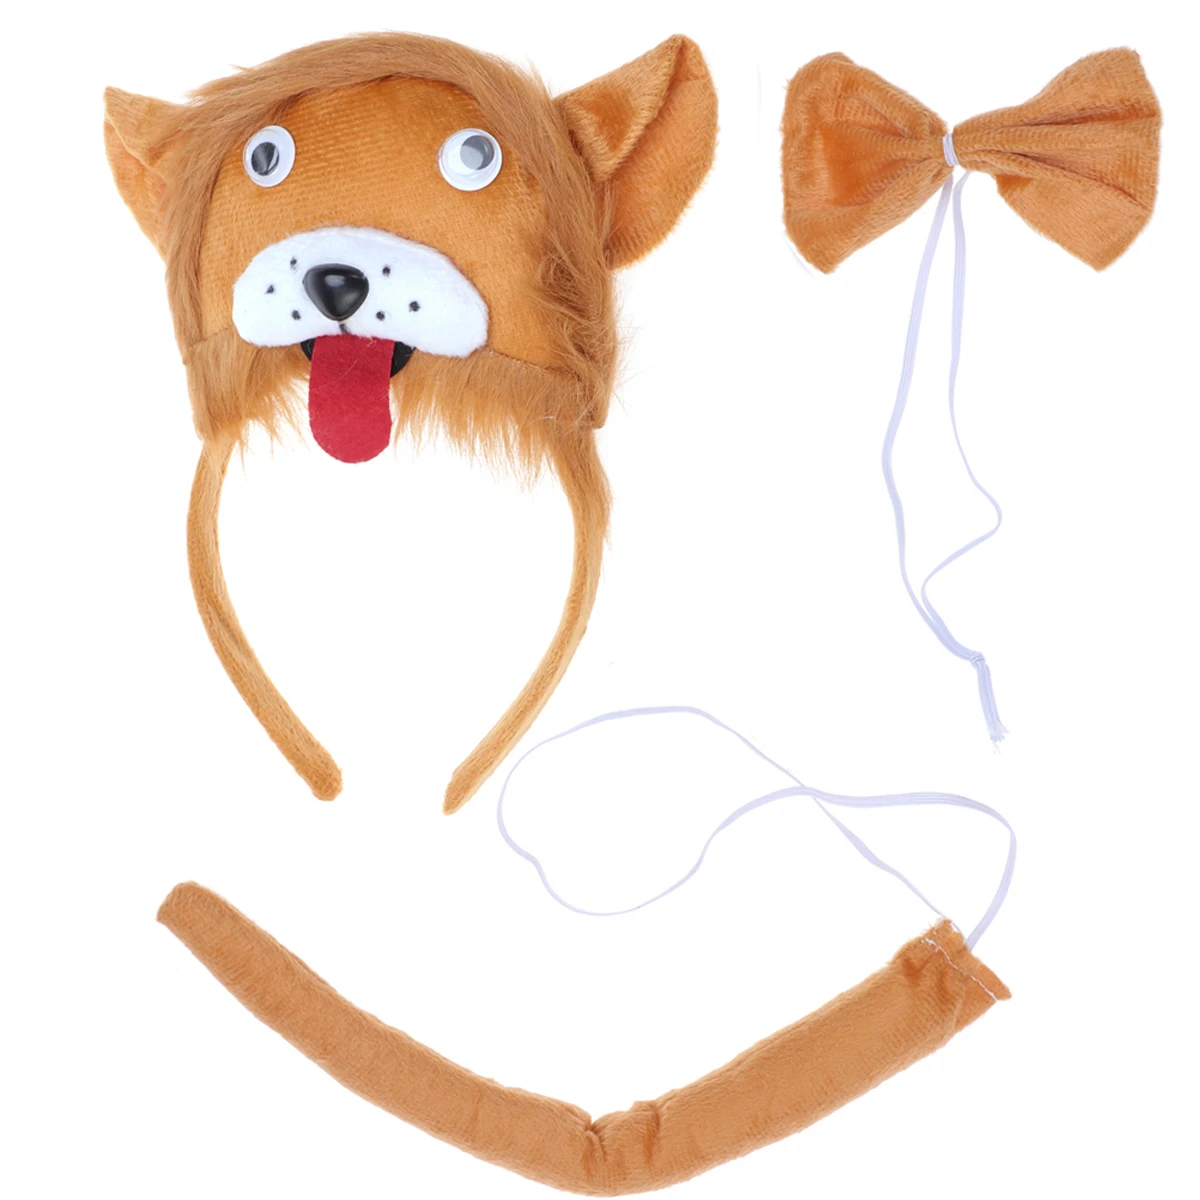 Lion Headband Kids Cute Animal Ears Headband Party Tie and Tail Cosplay ...